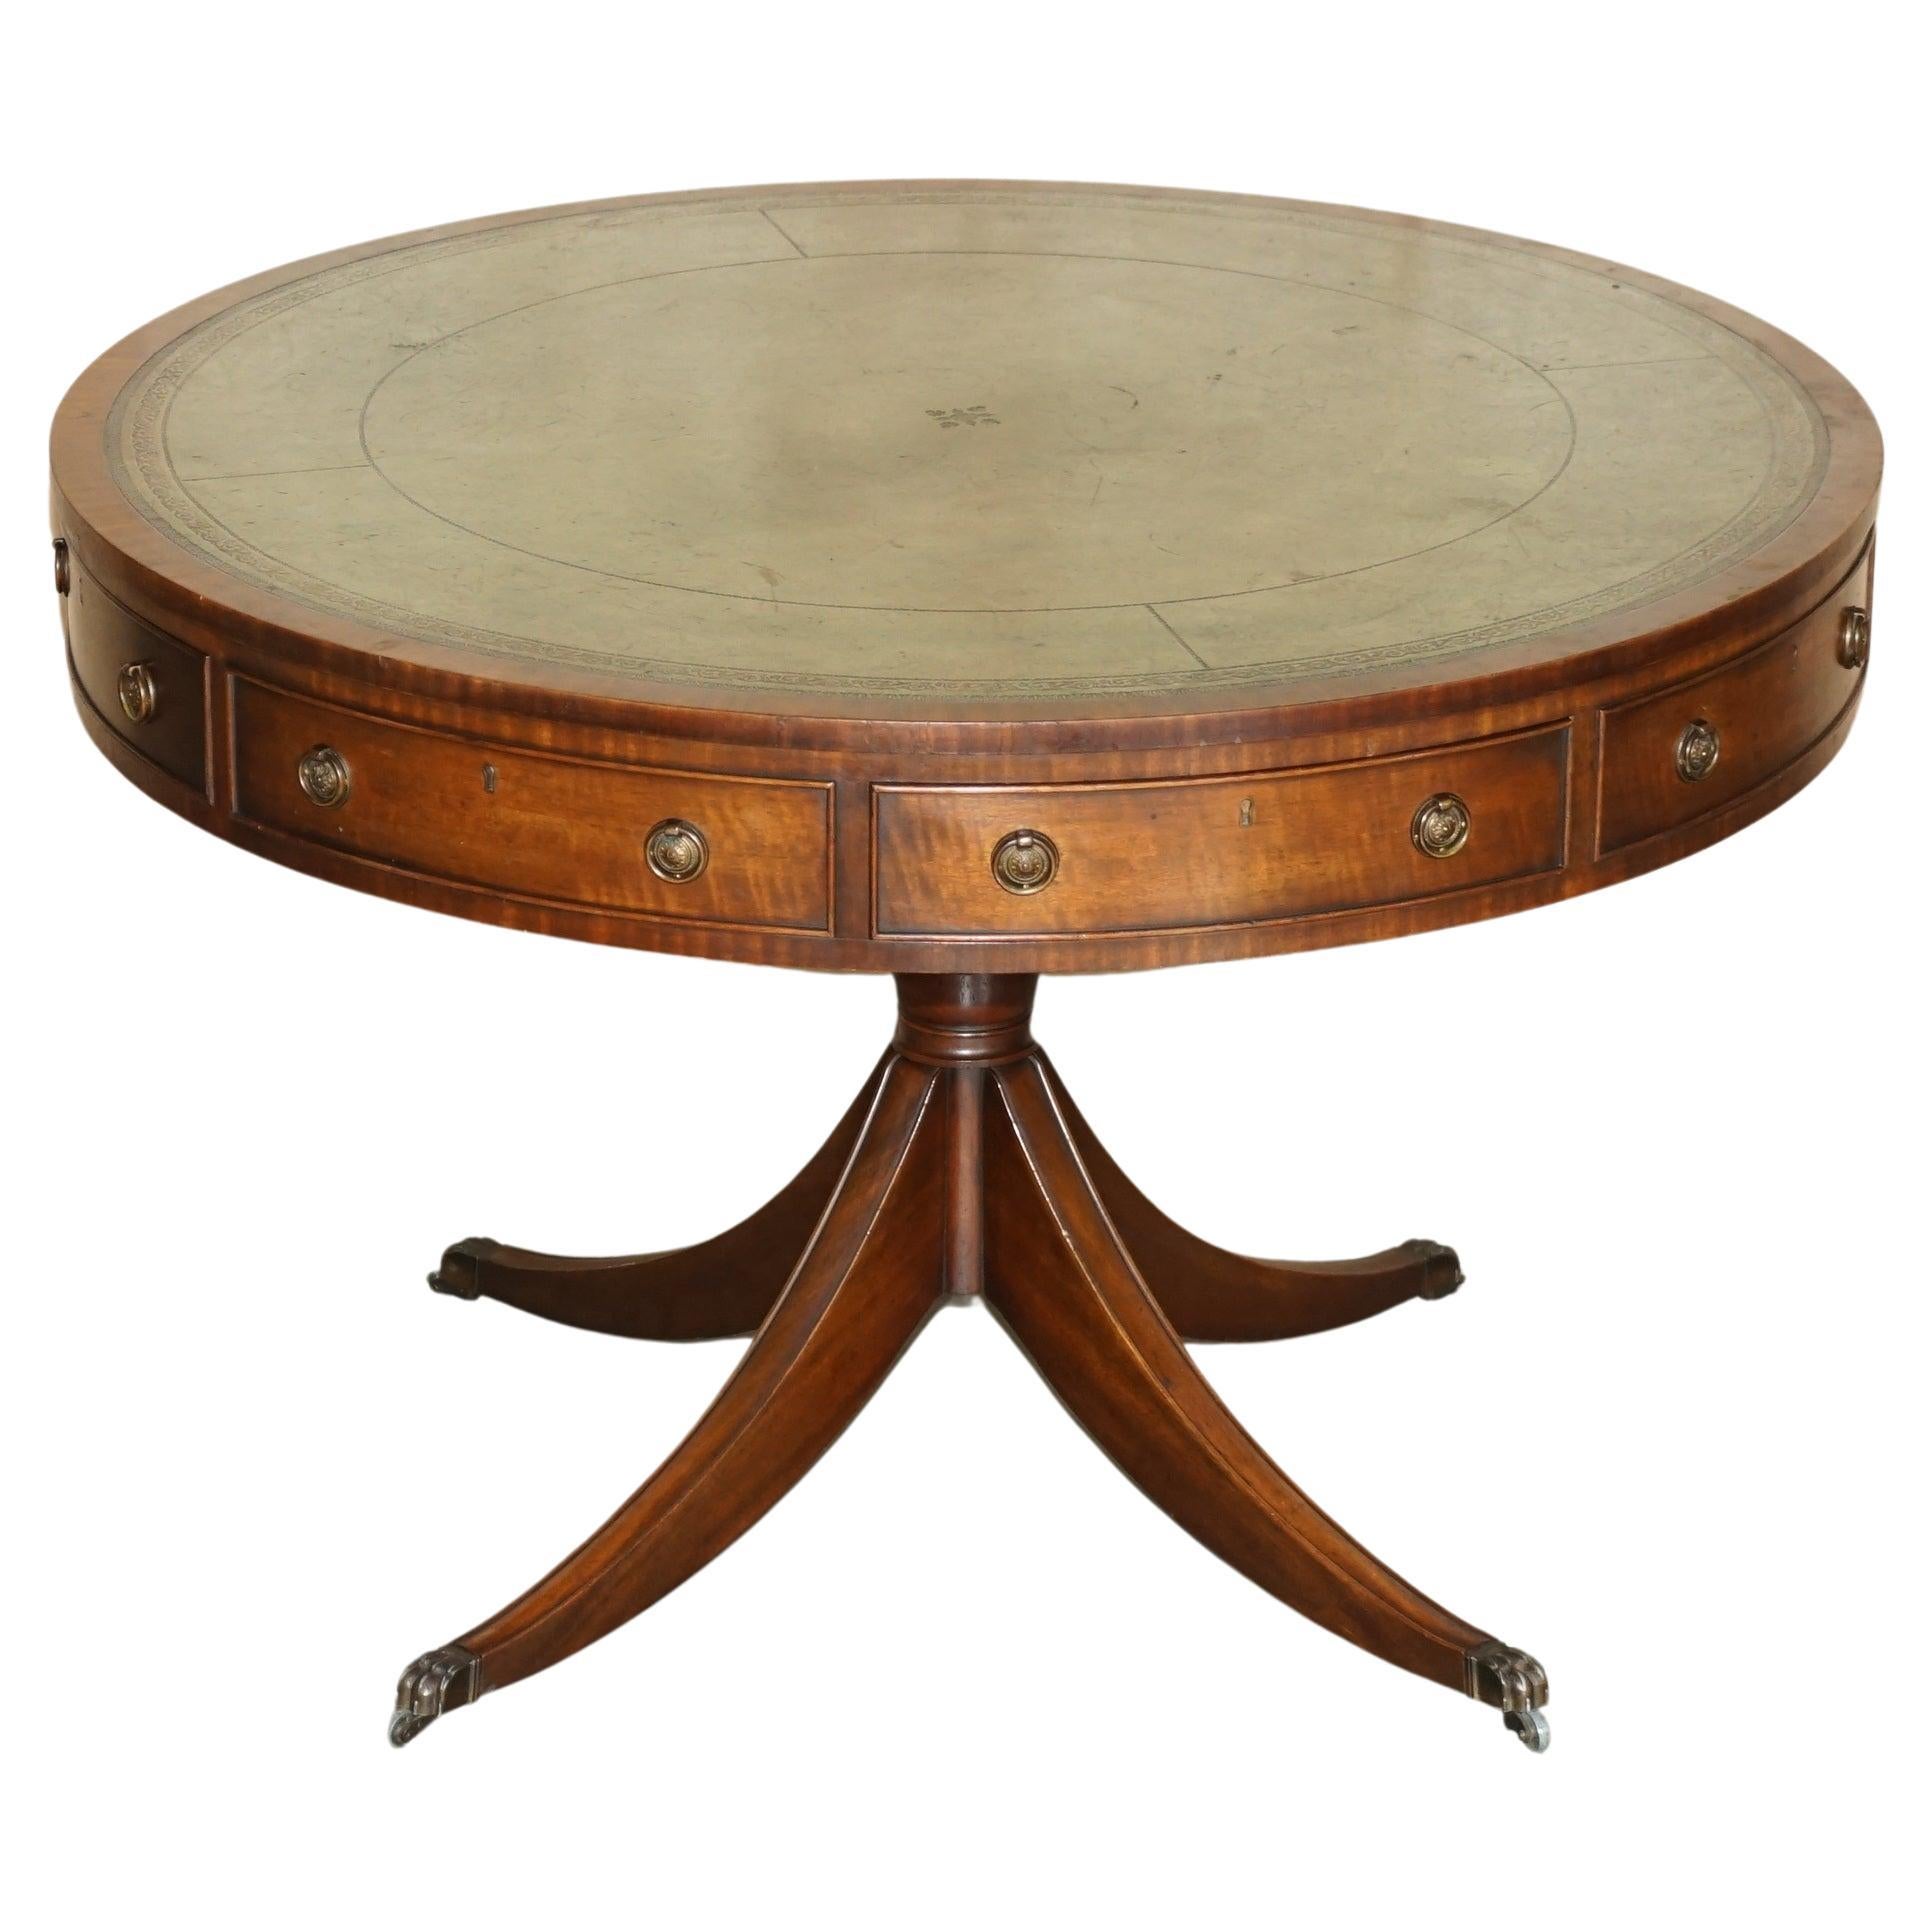 Antique Victorian Revolving Rent Drum Table Birdcage Mechanism Green Leather Top